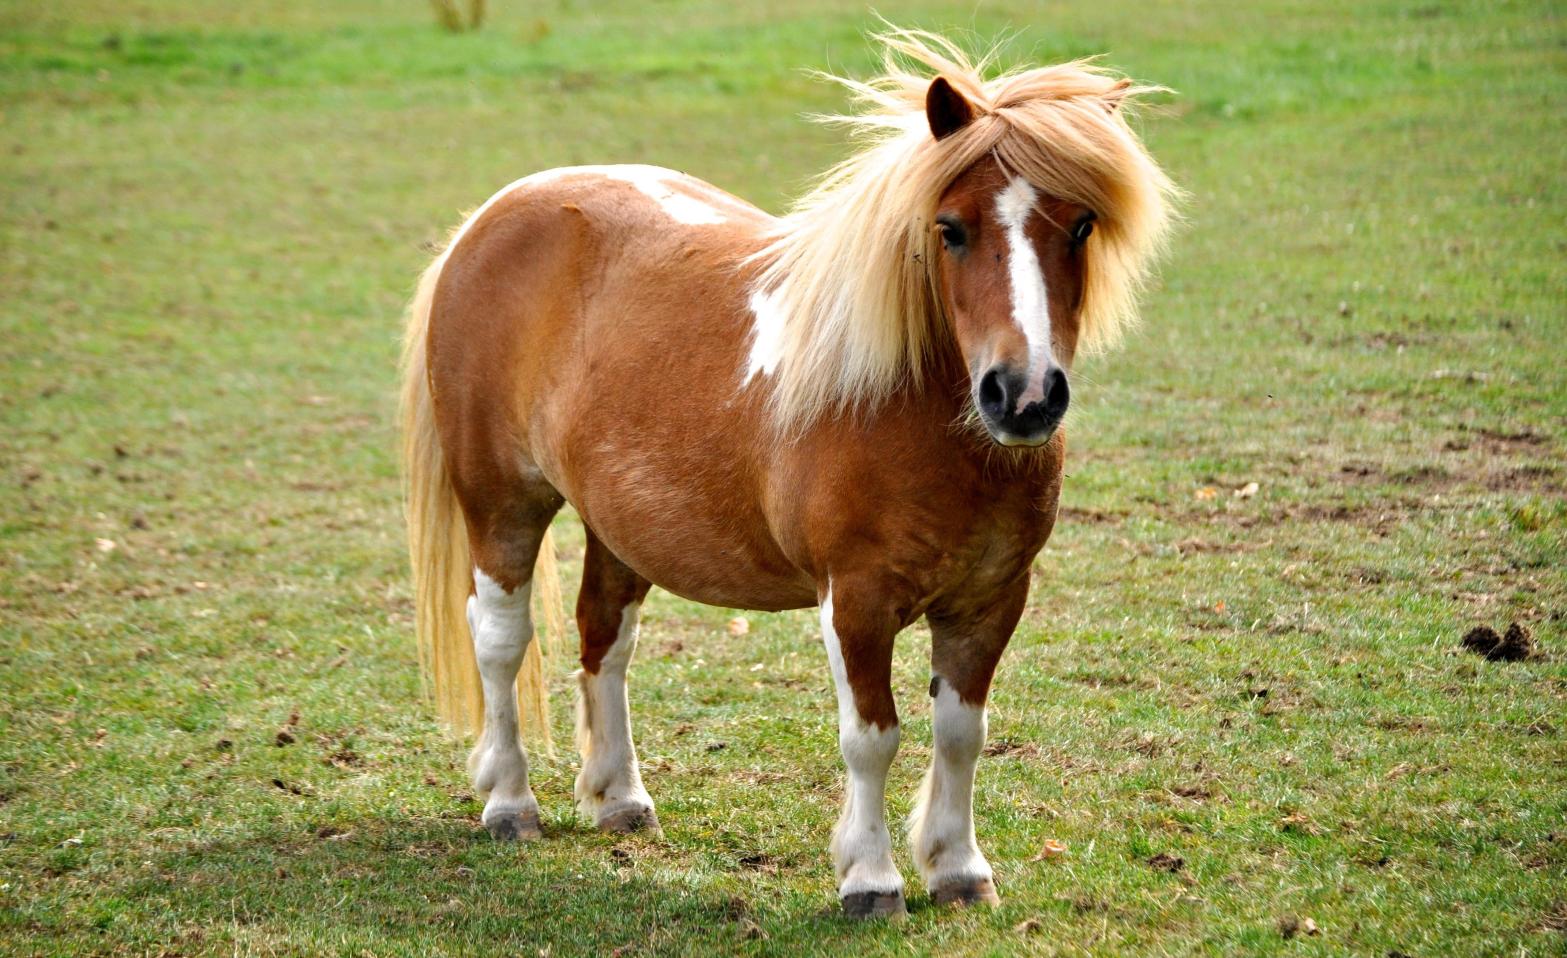 Baby horse doot doo doo doo doo doo. (Photo: Daisy Shakespeare, Shutterstock)